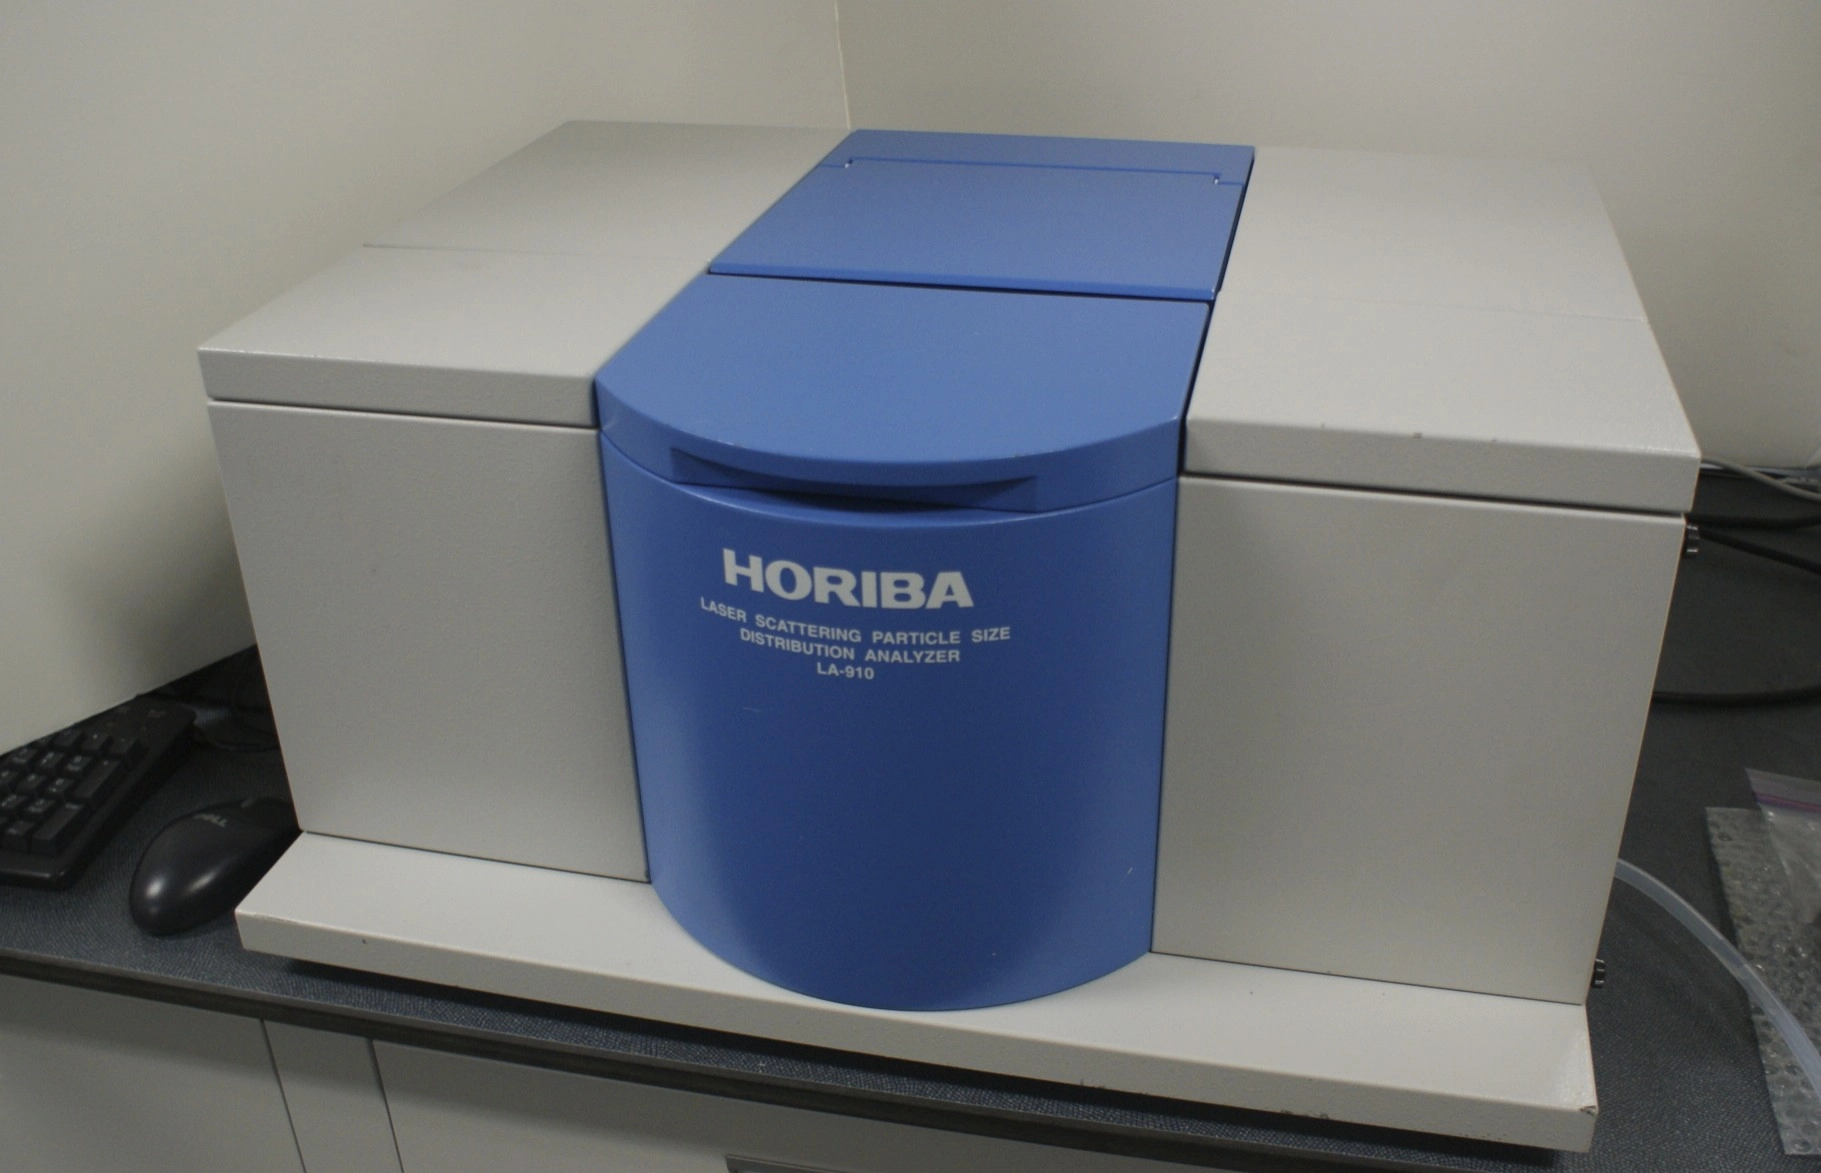 Horiba LA-910 Particle Size Analyzer HORIBA LA910 Laser Scattering Particle Size Distribution Analyzer used refurbished when